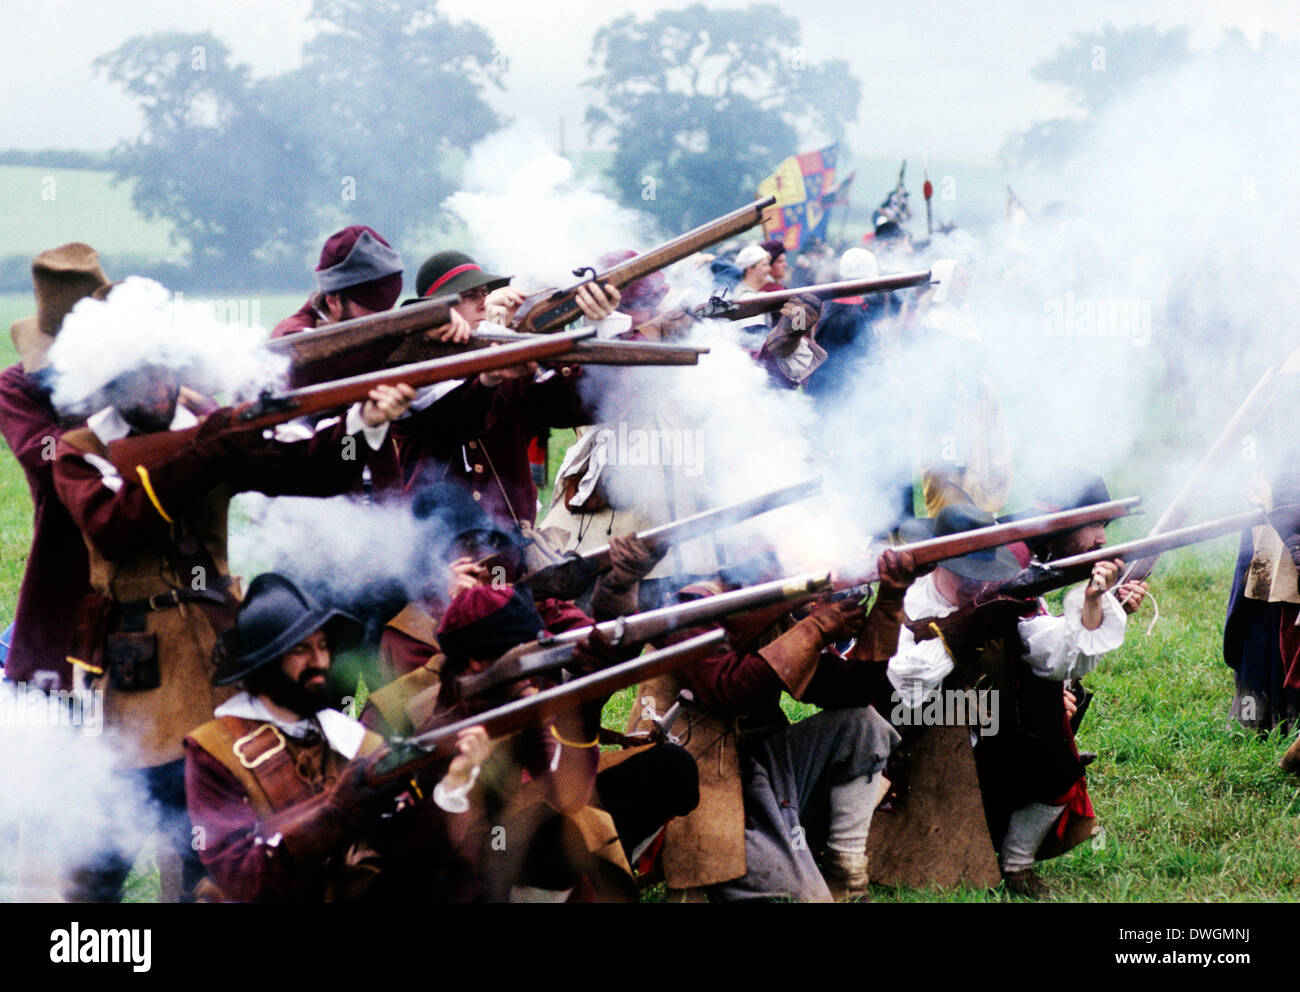 Englischer Bürgerkrieg, Muskete Feuer im Kampf, 17. Jahrhundert, feuern Musketen, Reenactment Soldat Soldaten England UK Militär-Kämpfe Stockfoto